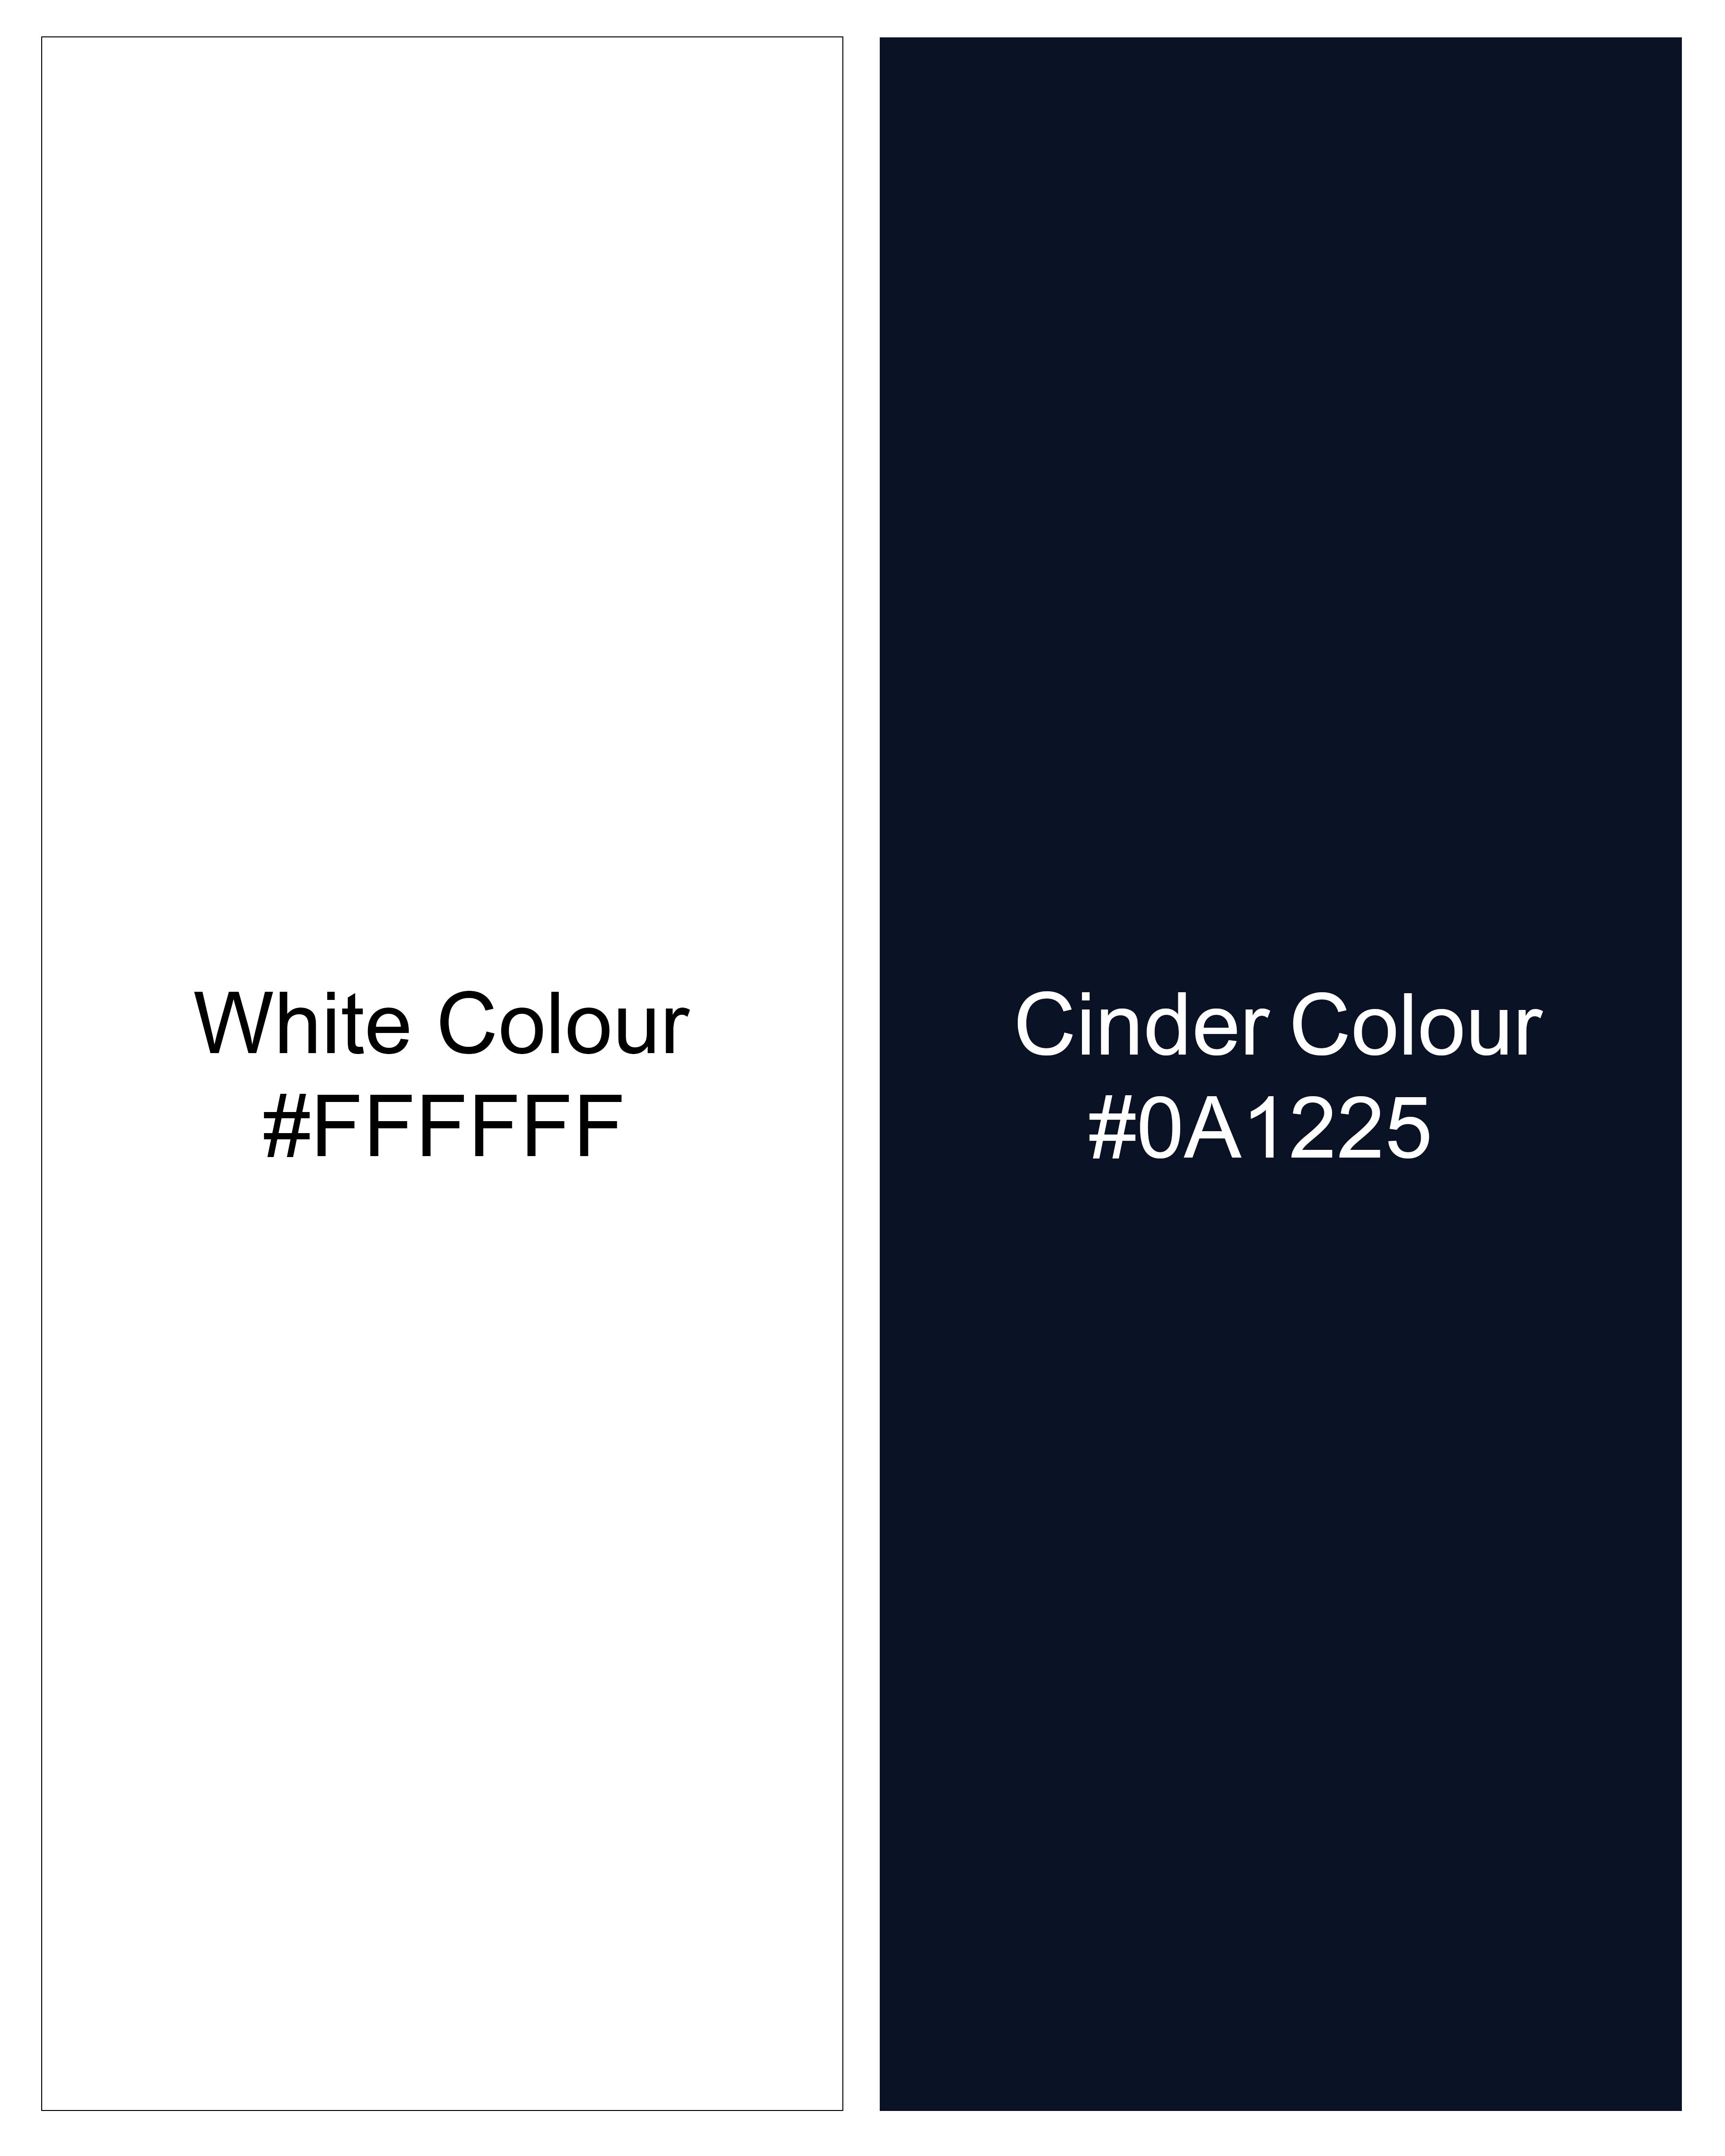 Cinder Black and White Floral Printed Premium Cotton Shirt         9573-CC-BLE-SS-H-38, 9573-CC-BLE-SS-H-39, 9573-CC-BLE-SS-H-40, 9573-CC-BLE-SS-H-42, 9573-CC-BLE-SS-H-44, 9573-CC-BLE-SS-H-46, 9573-CC-BLE-SS-H-48, 9573-CC-BLE-SS-H-50,  9573-CC-BLE-SS-H-52